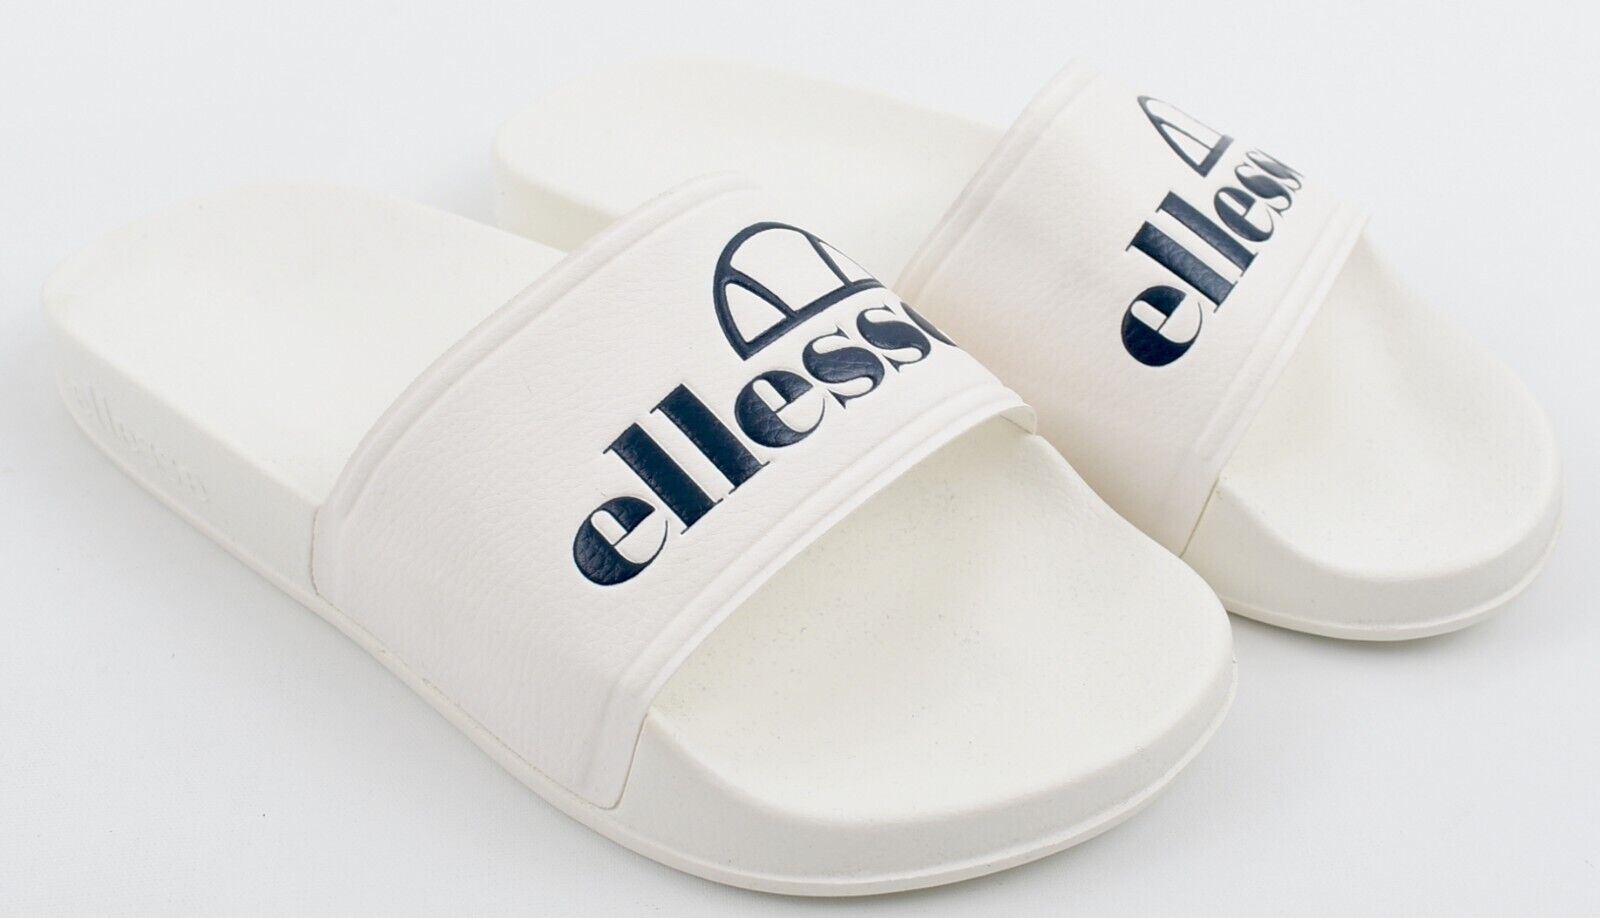 ELLESSE - FILIPPO Women's Logo Sliders, Sandals, White, size UK 3/ EU 36